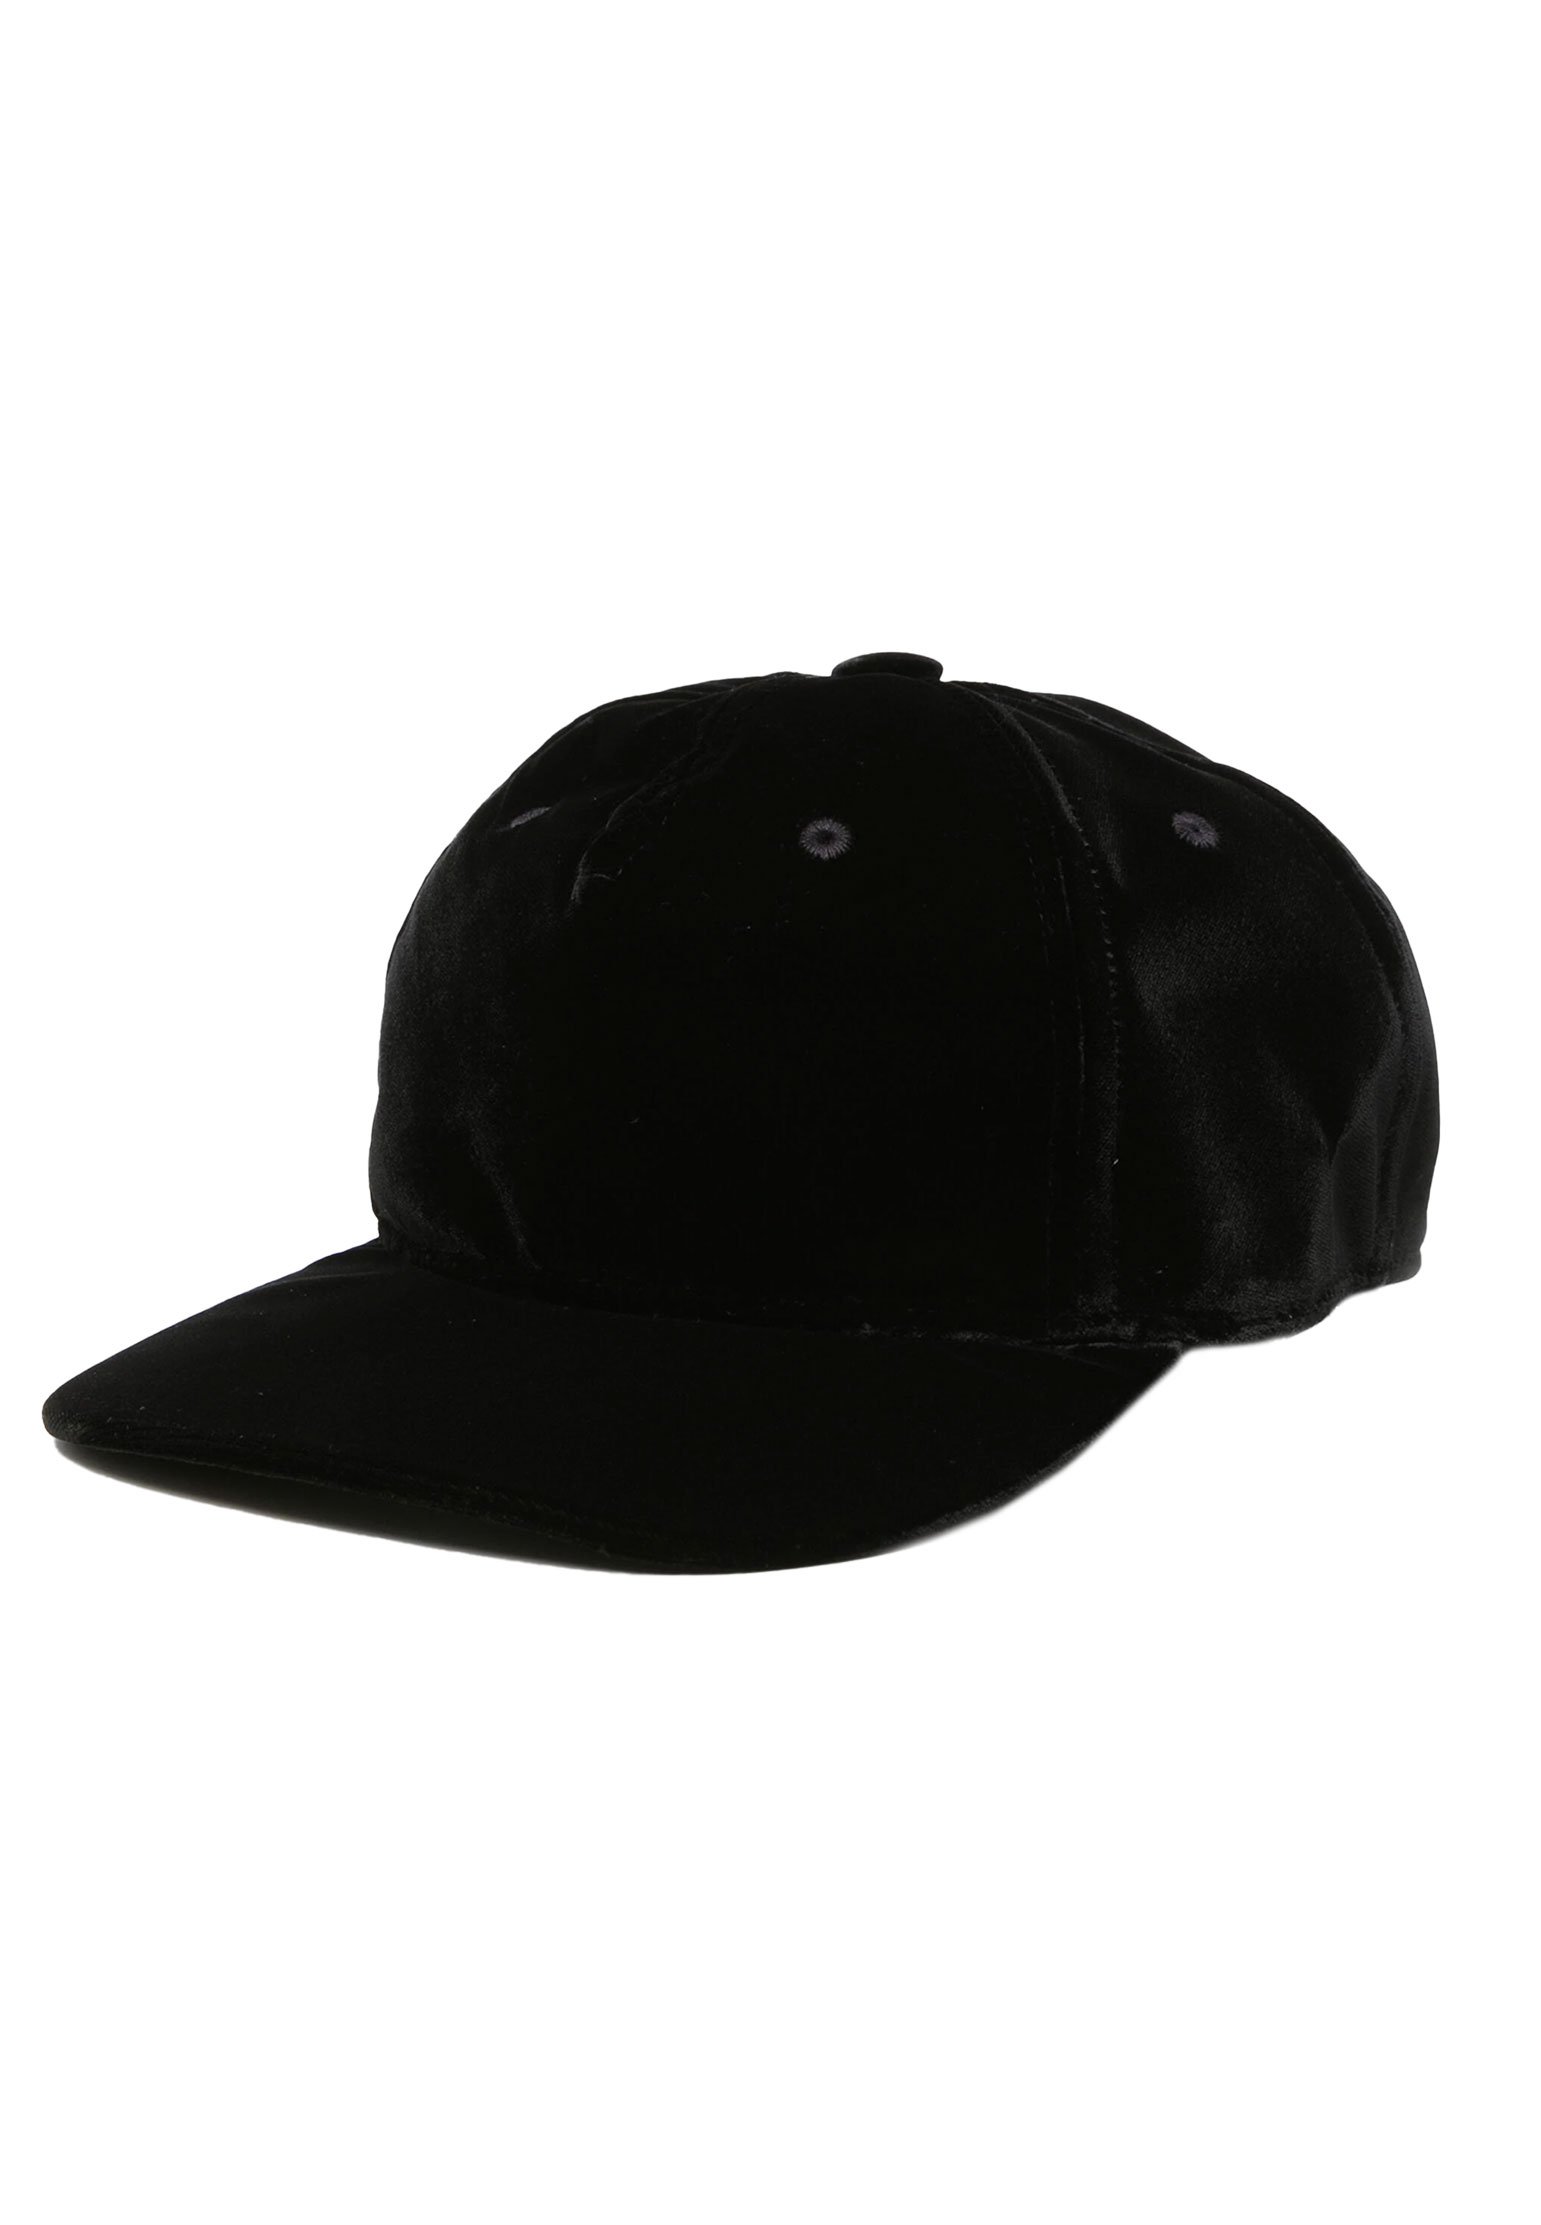 Cap TOM FORD Color: black (Code: 2995) in online store Allure